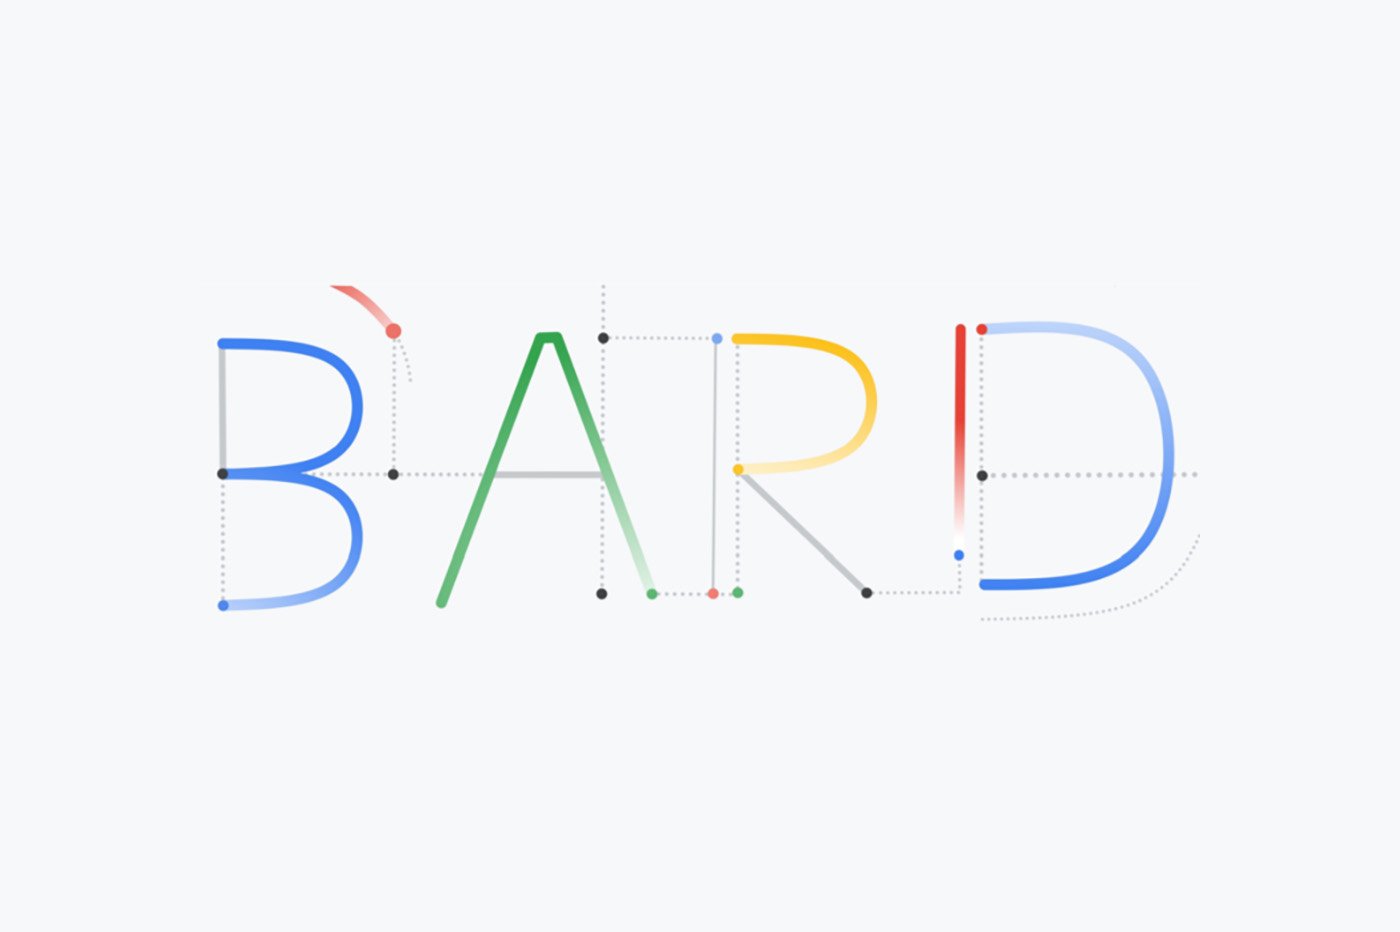 Comment essayer Google Bard